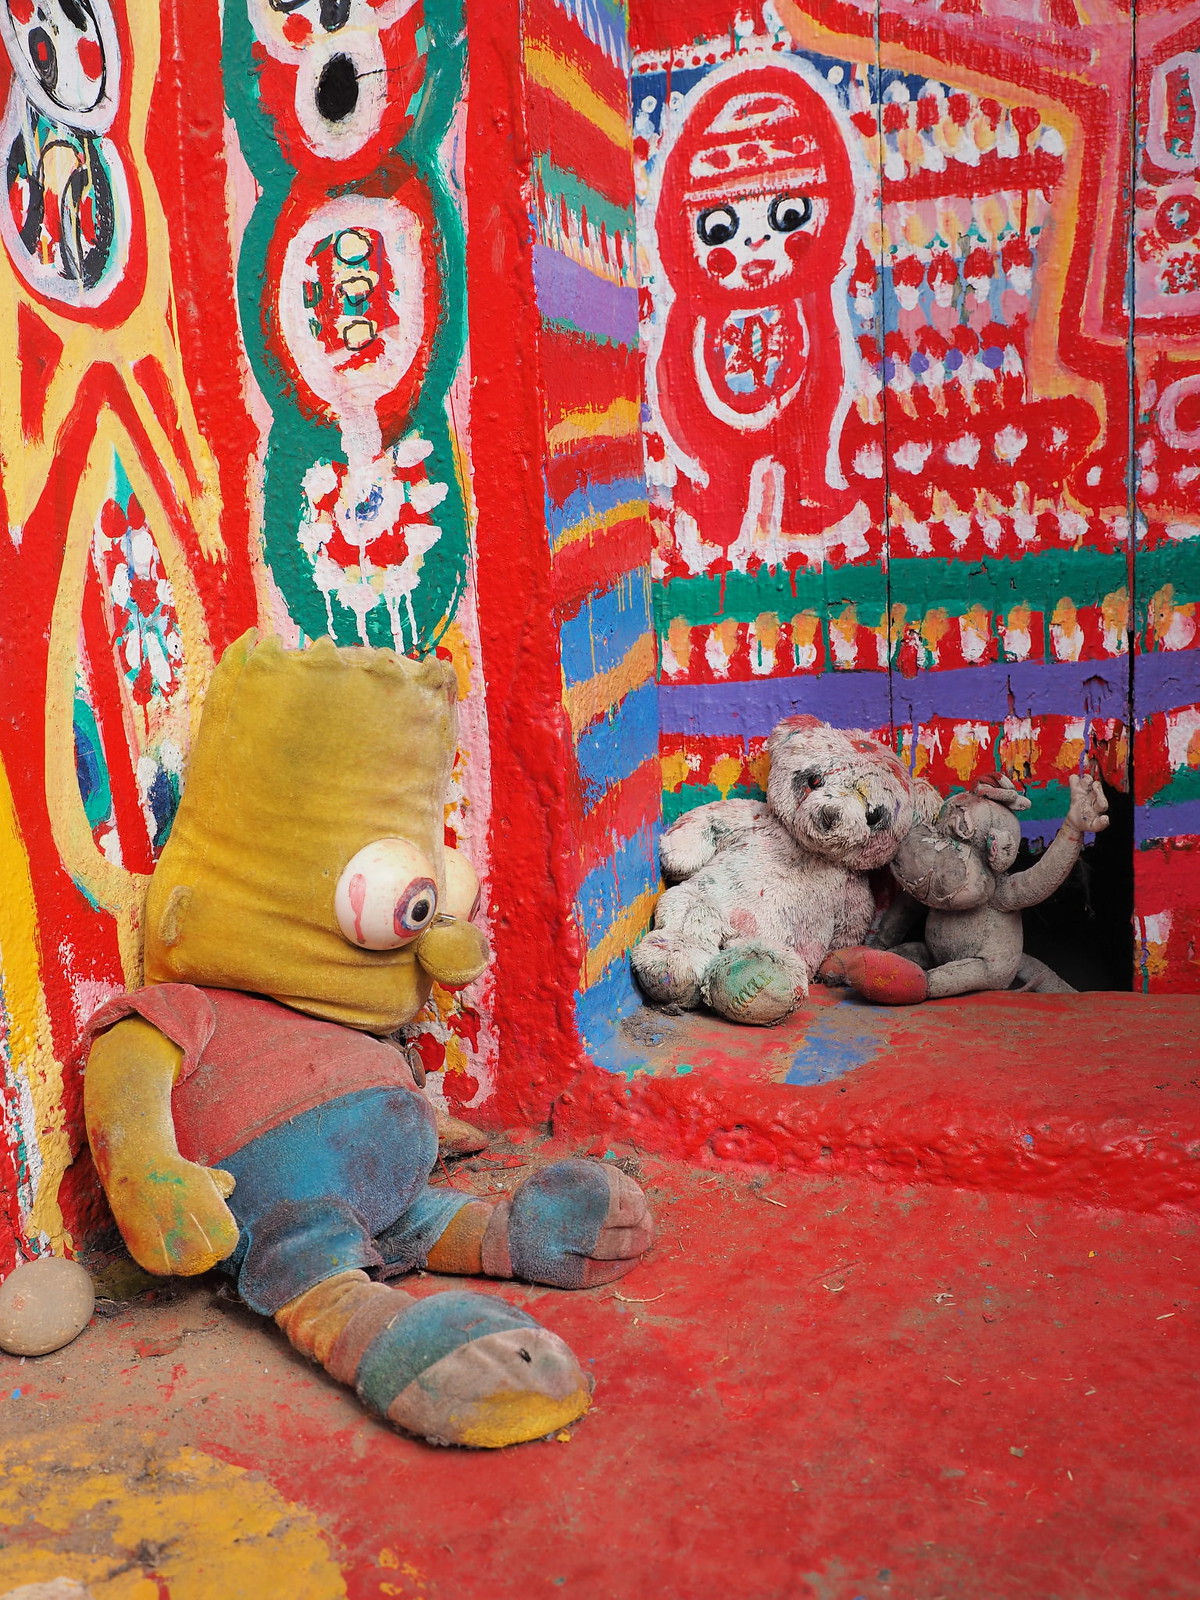 Abandoned dolls at Rainbow Village (彩虹眷村)